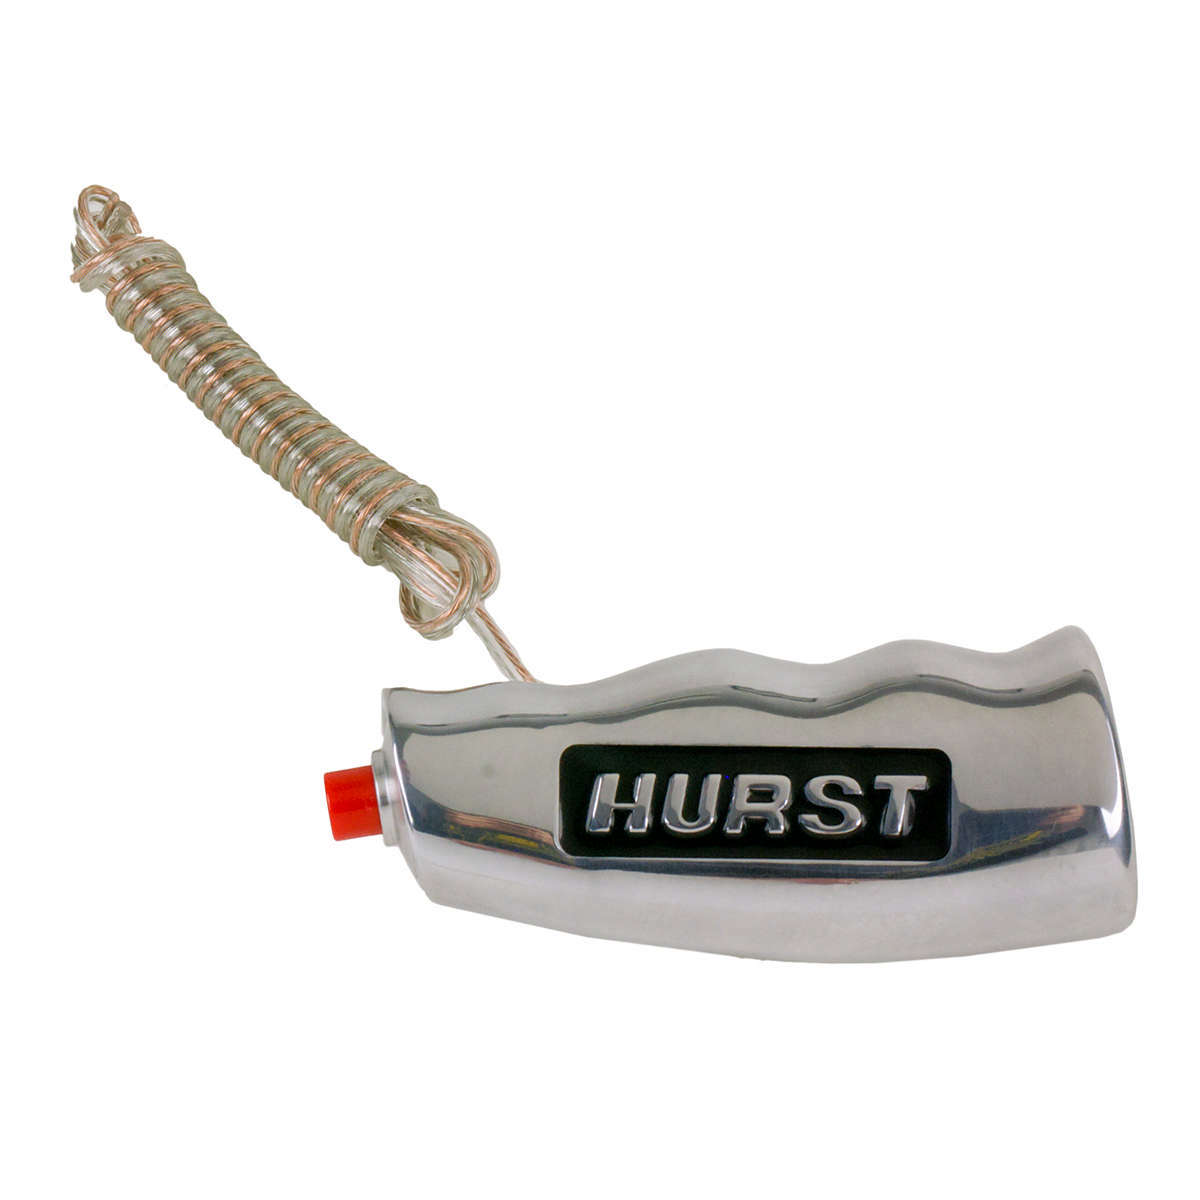 Hurst 153-0011 Shifter Knob, T-Handle, 3/8-16, 7/16-20, 1/2-20 in, 10 mm x 1.25, 10 mm x 1.5, 12 mm x 1.25, 12 mm x 1.75, 16 mm x 1.5 Thread, 12V Button, Hurst Logo, Aluminum, Polished, Universal, Each